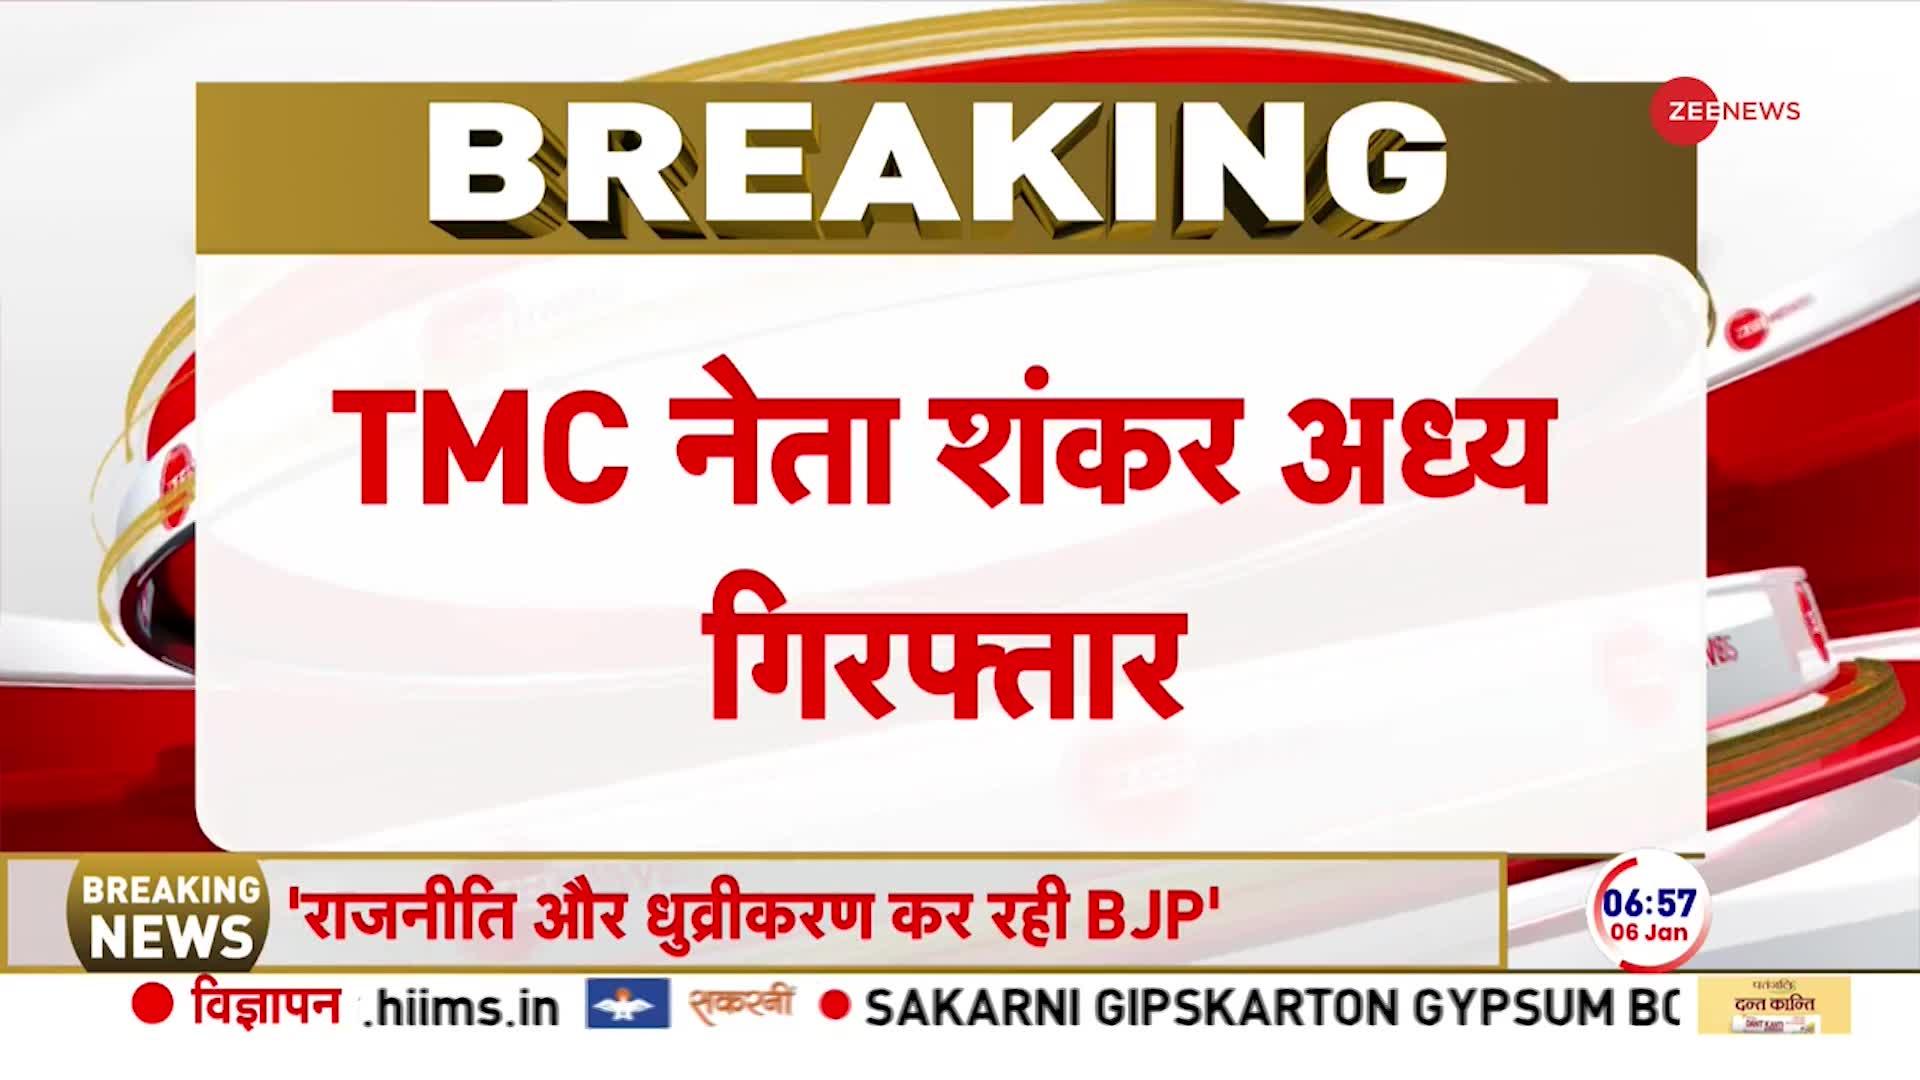 West Bengal News: राशन घोटाले में TMC नेता शंकर अध्य गिरफ्तार | Ration Scam